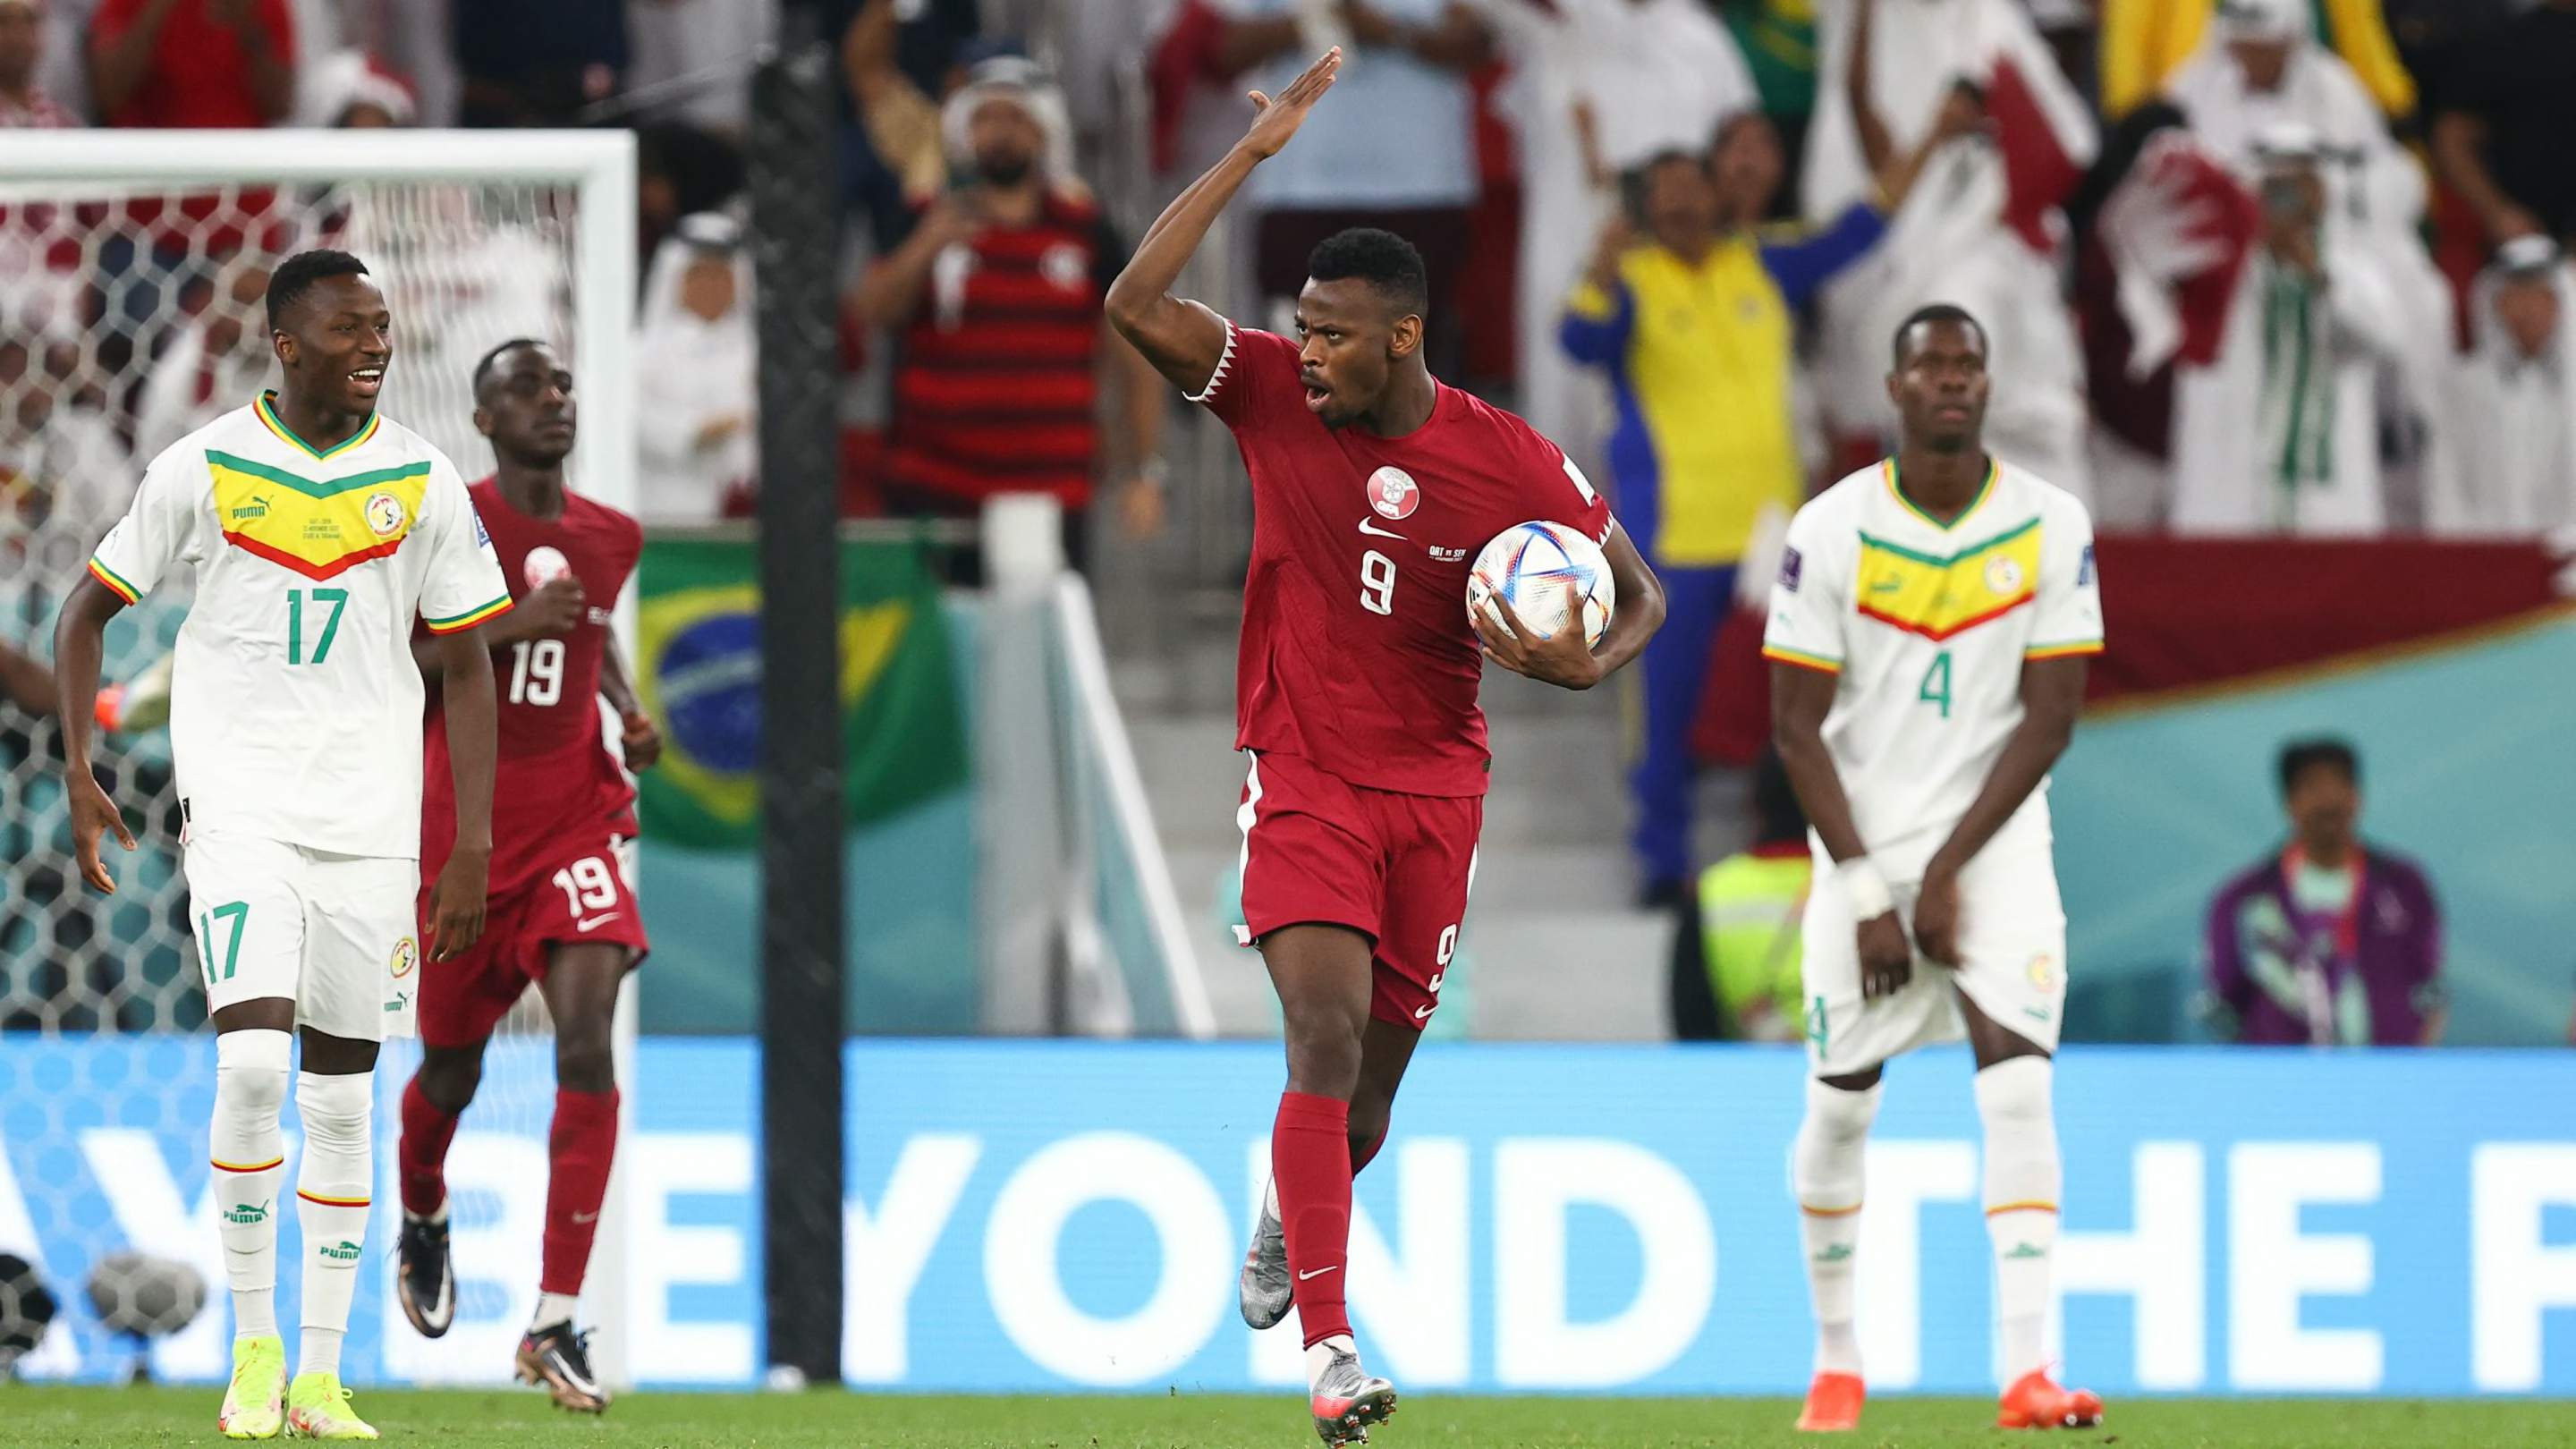 Qatar 1-3 Senegal: Player ratings as hosts score but face certain elimination